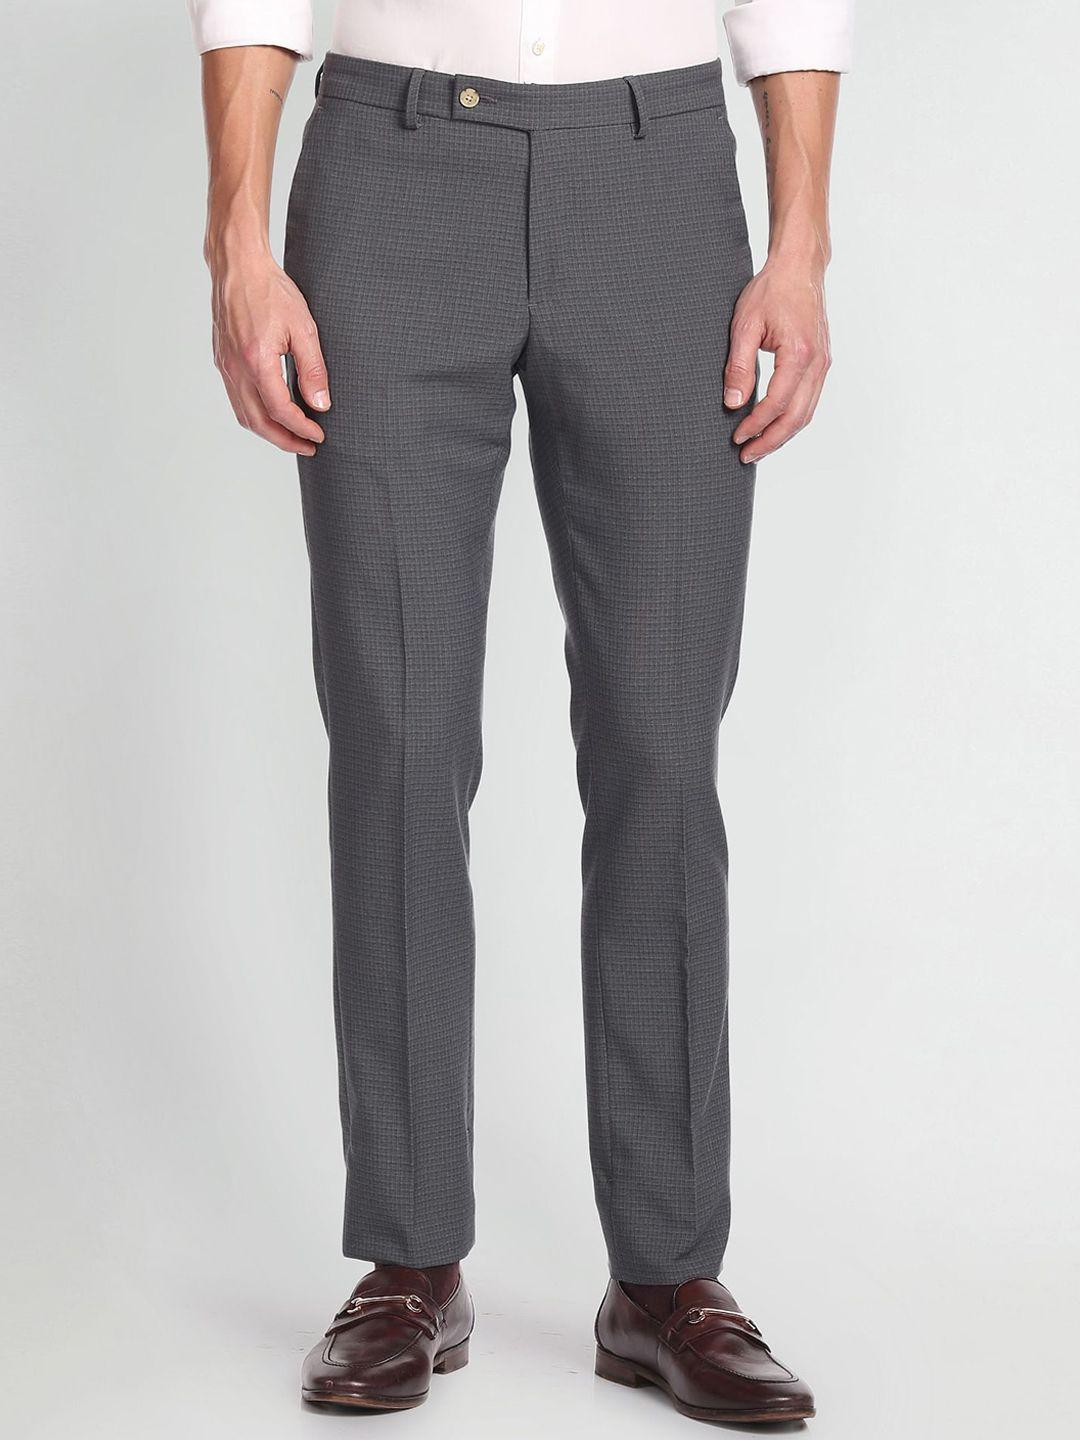 arrow-men-mid-rise-geometric-printed-woven-design-formal-trouser